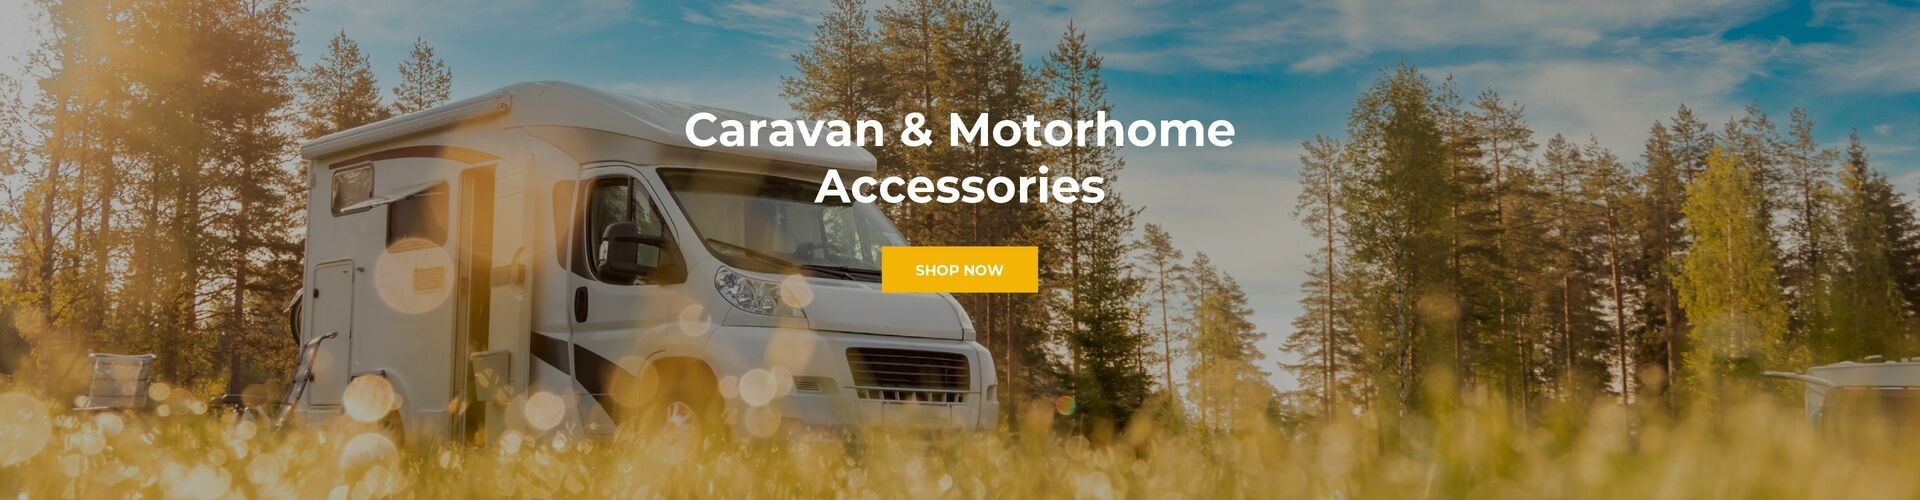 Caravan & Motorhome Accessories